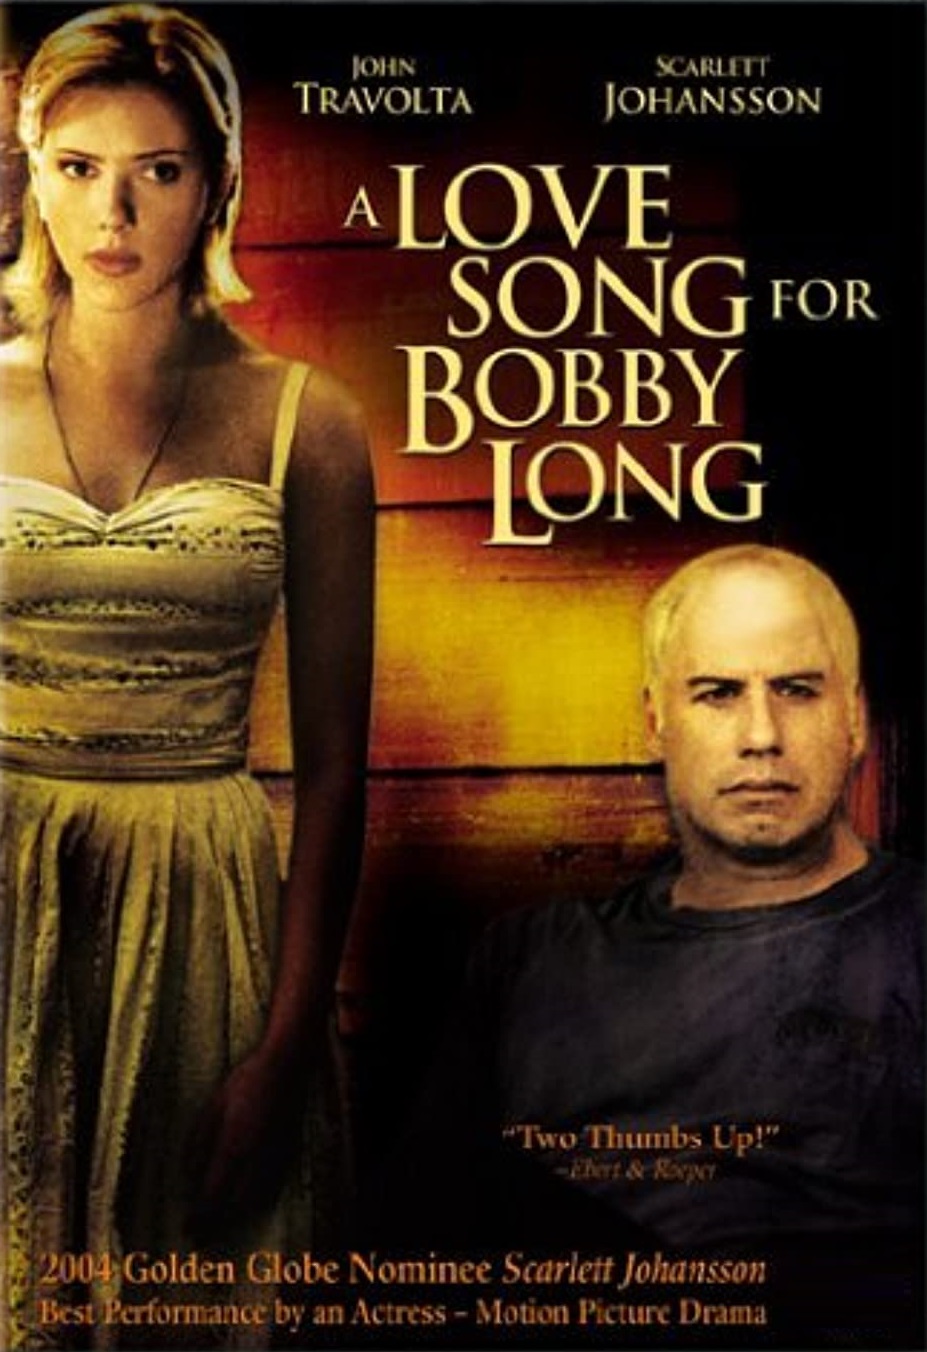 EN - A Love Song For Bobby Long (2004) SCARLETT JOHANSSON, JOHN TRAVOLTA